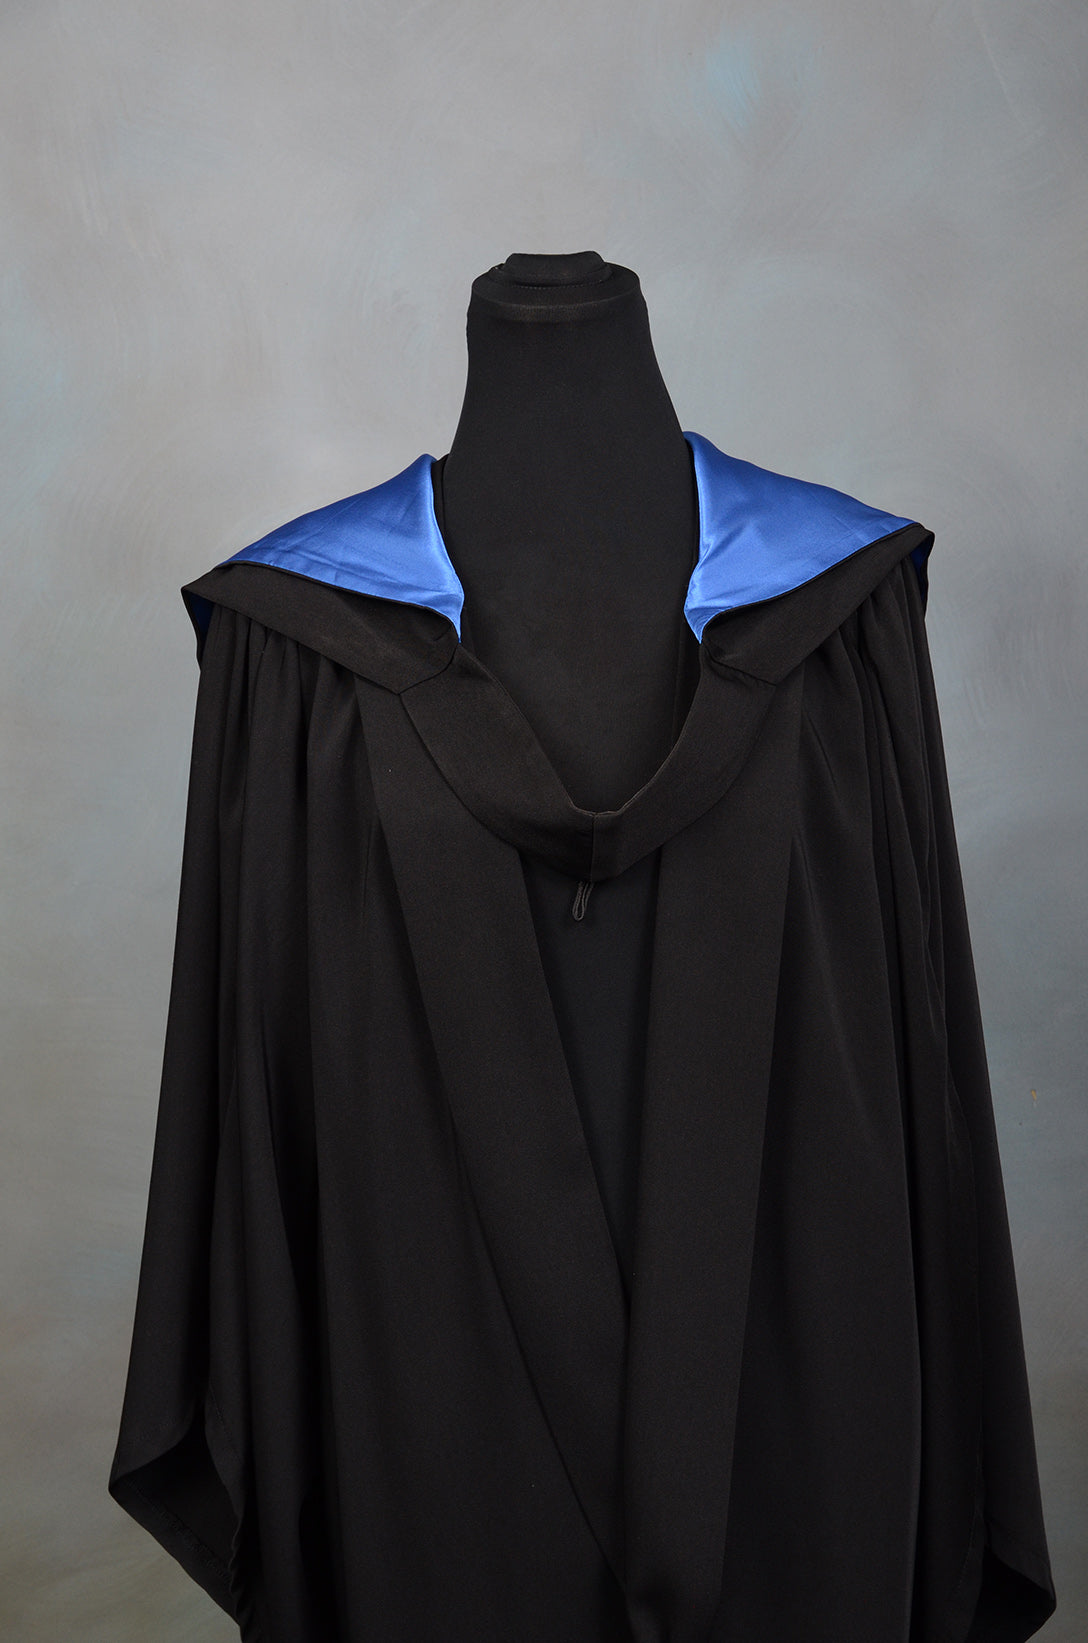 Update more than 210 ba graduation gown best